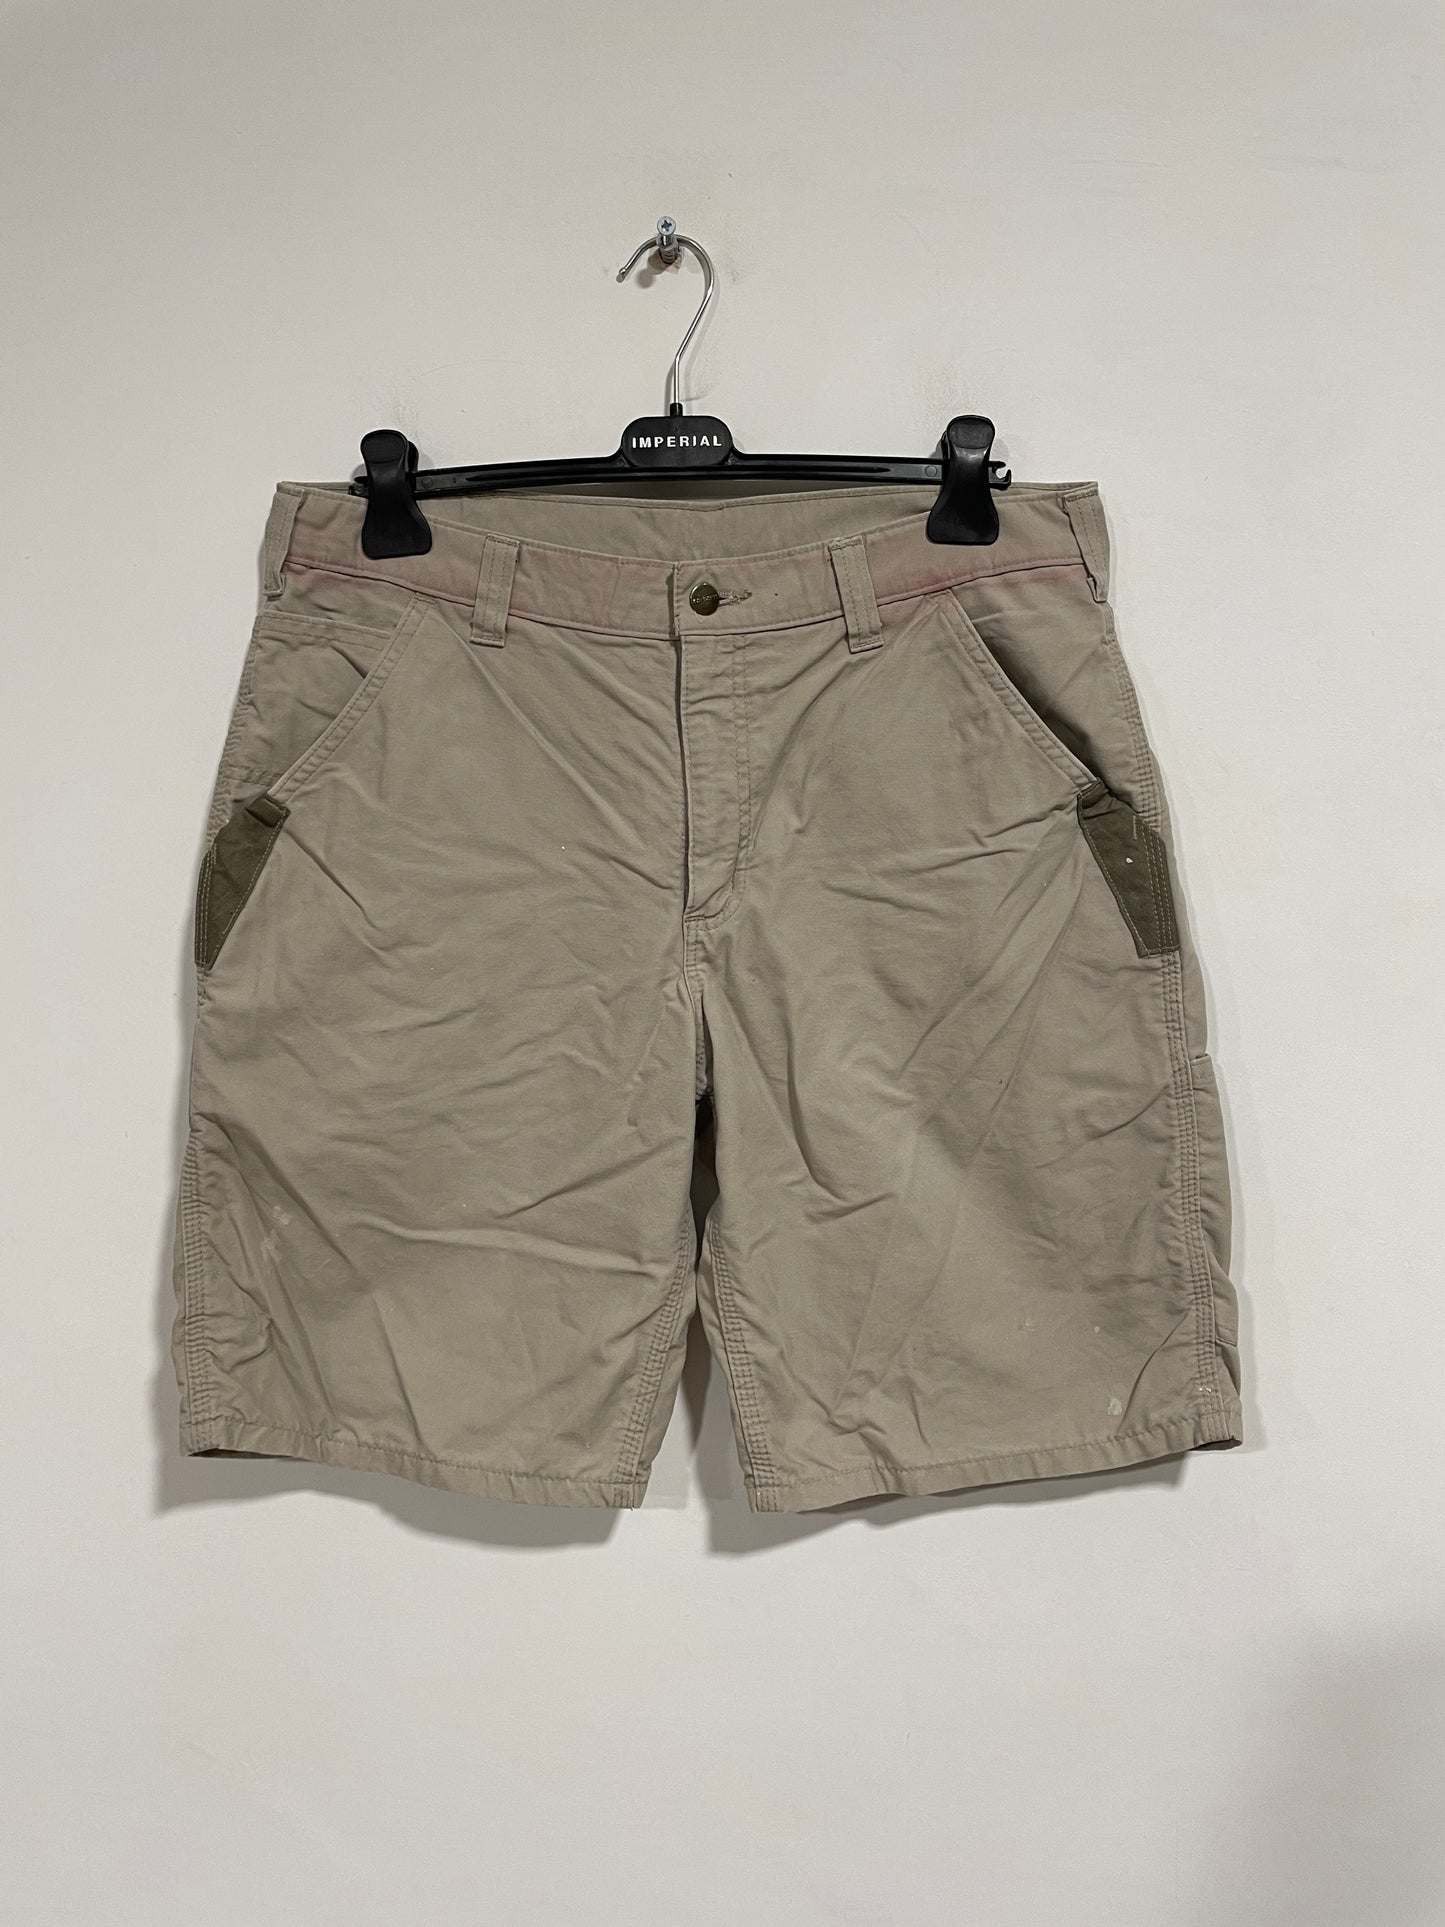 Shorts Carhartt workwear (MR324)